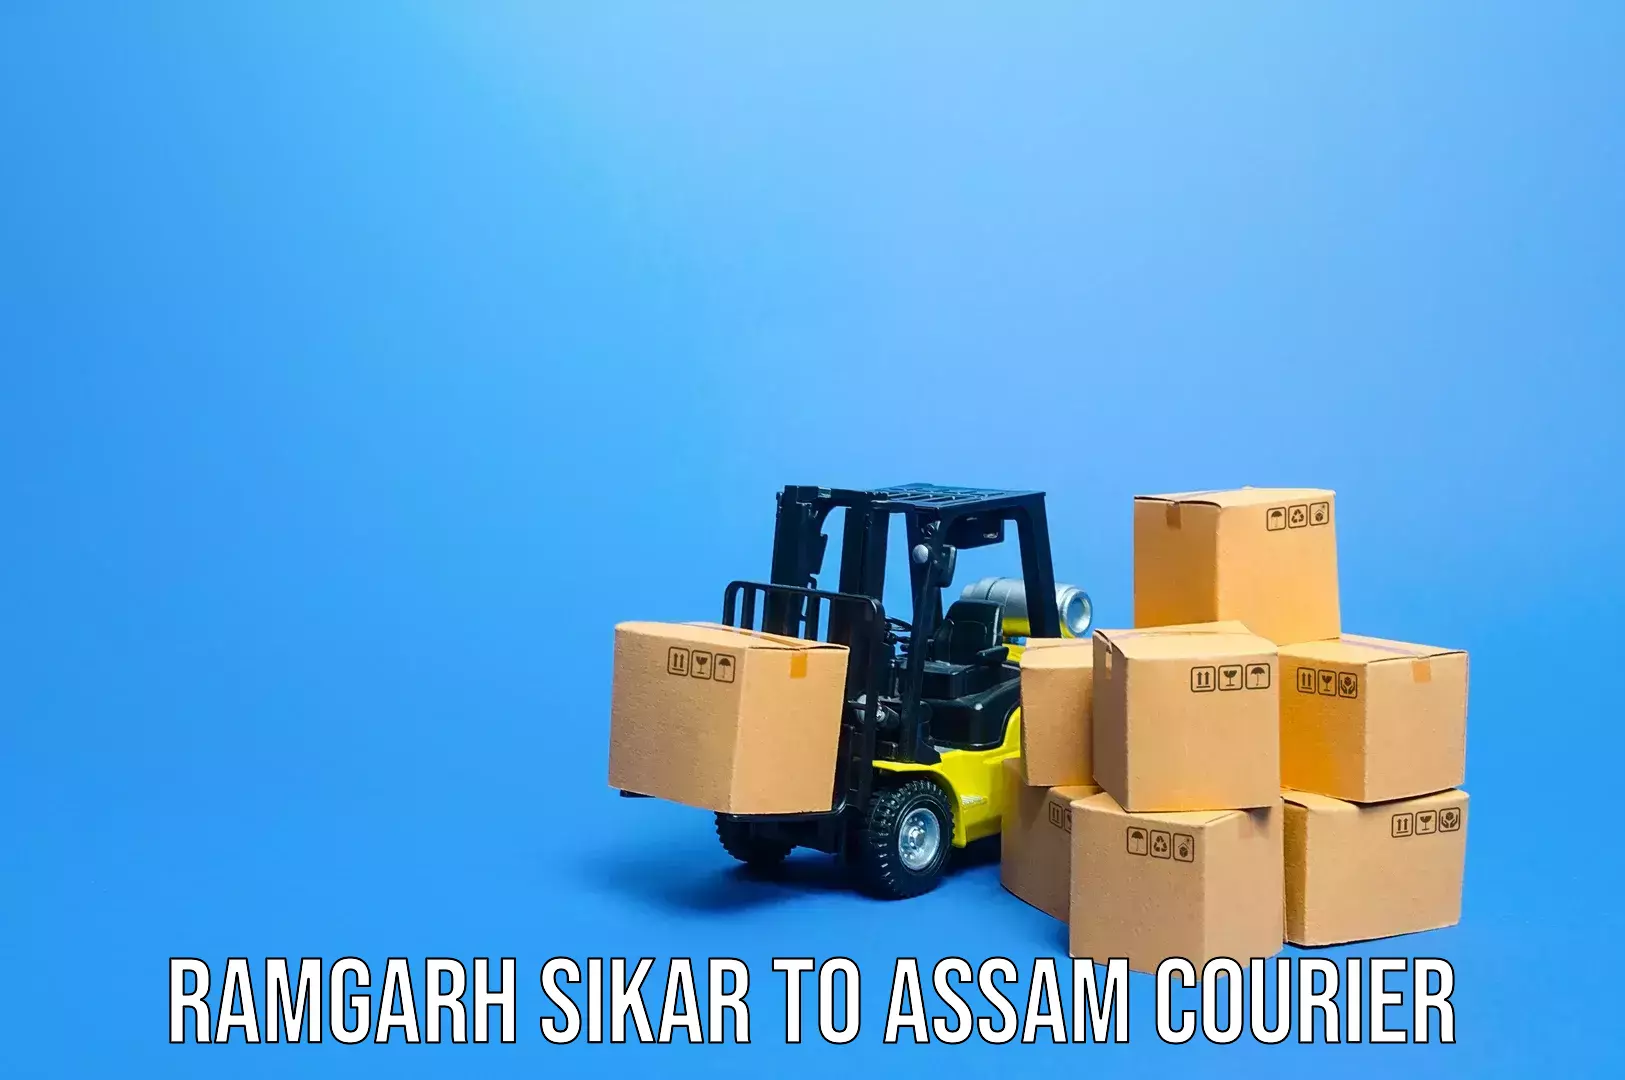 Baggage relocation service Ramgarh Sikar to Udalguri